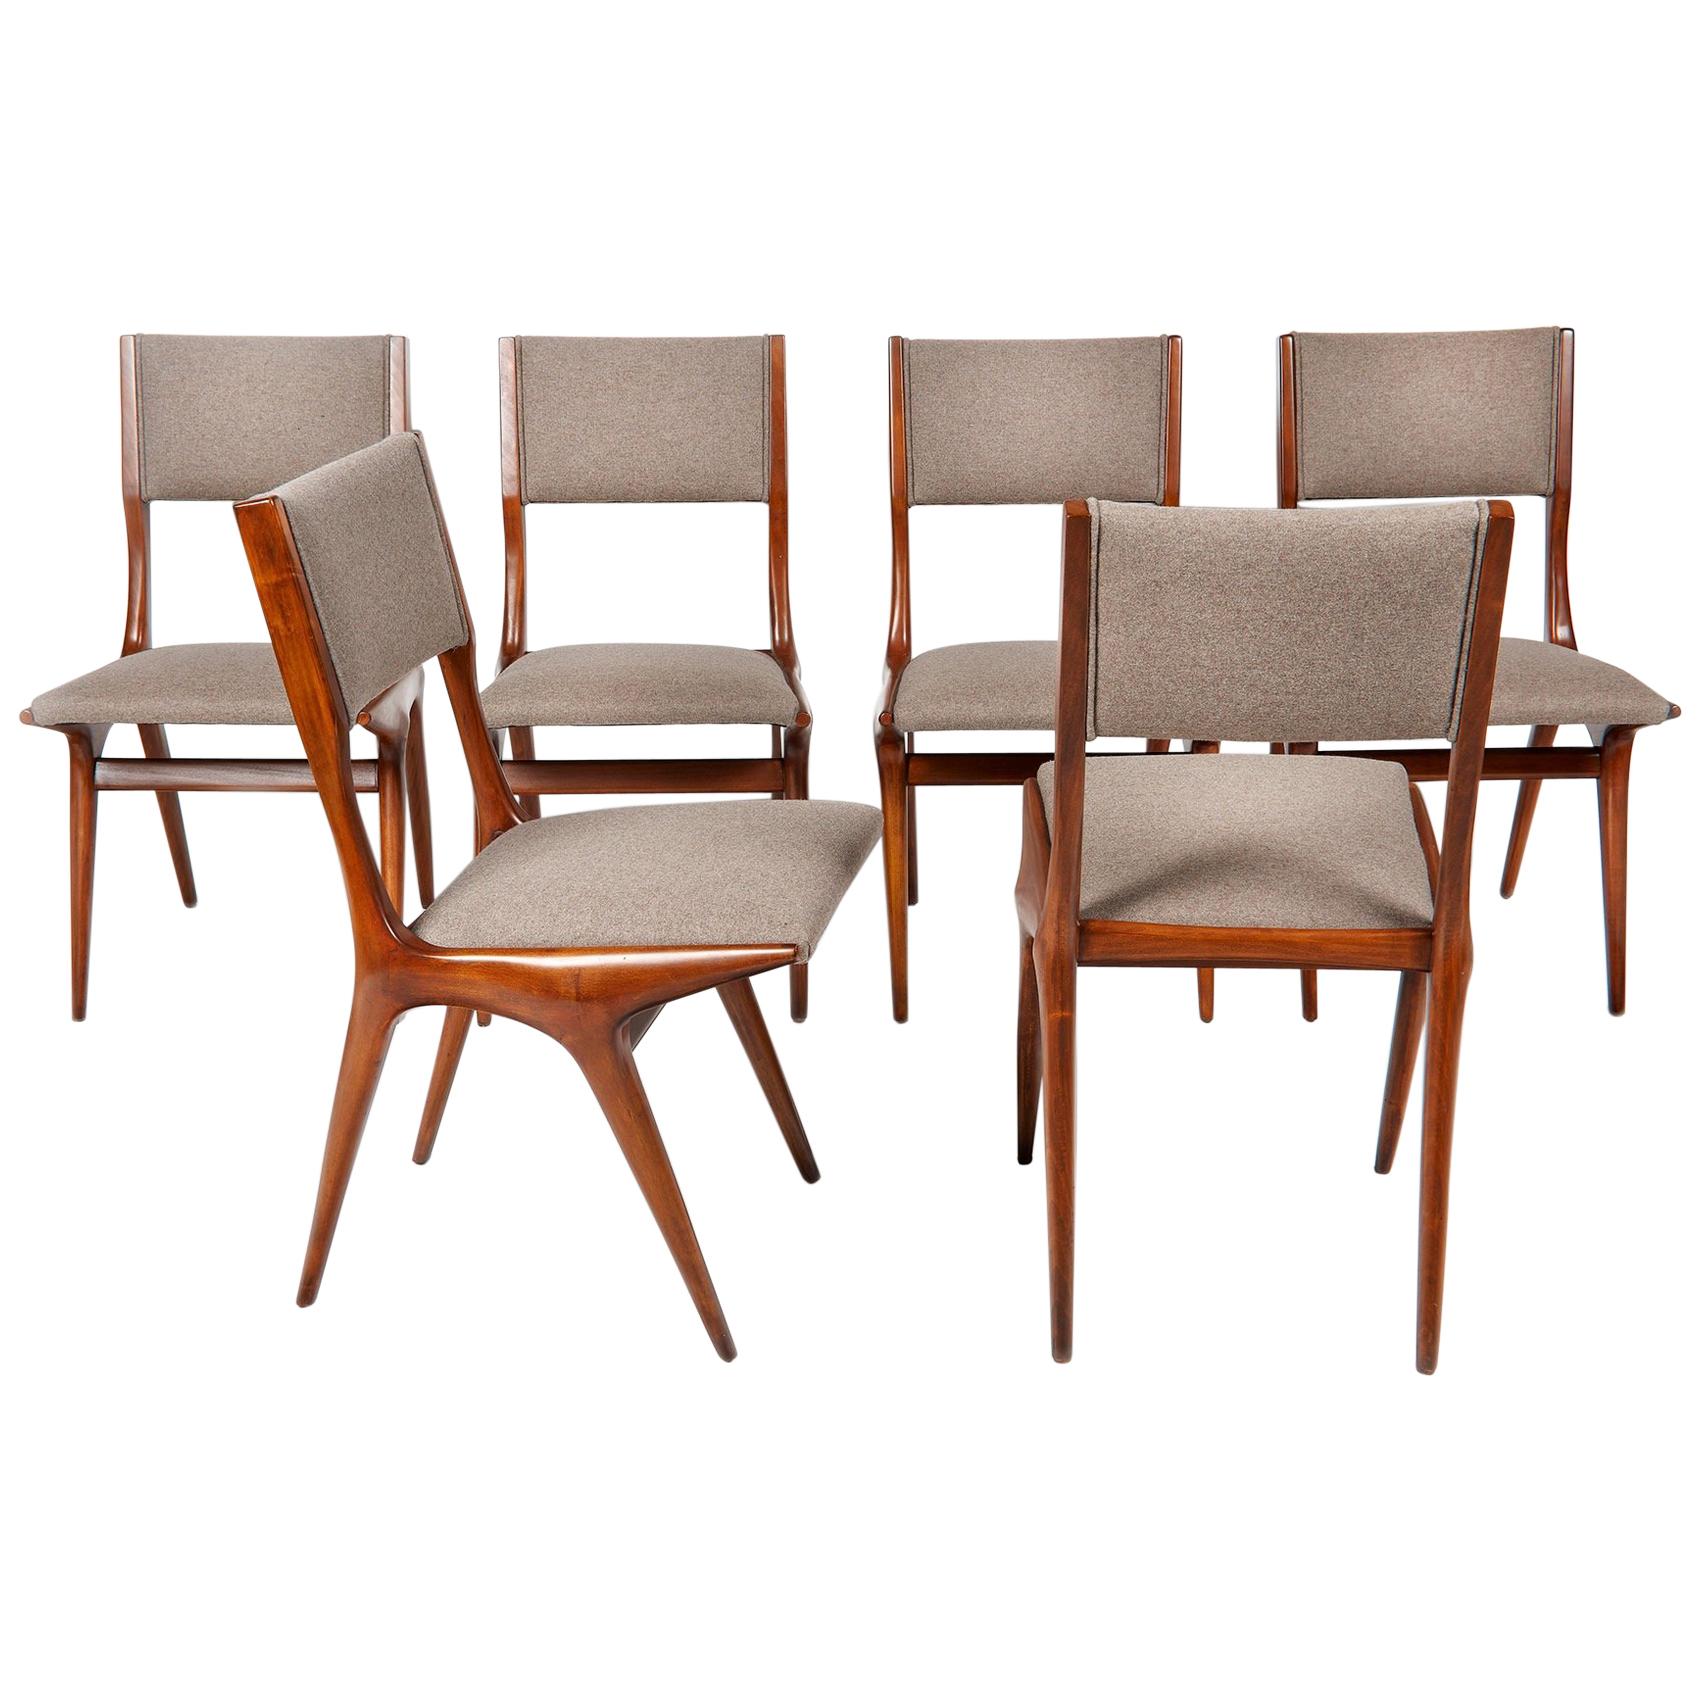 Carlo de Carli Mod 158, Set of Six Dining Chairs, Italy, 1953